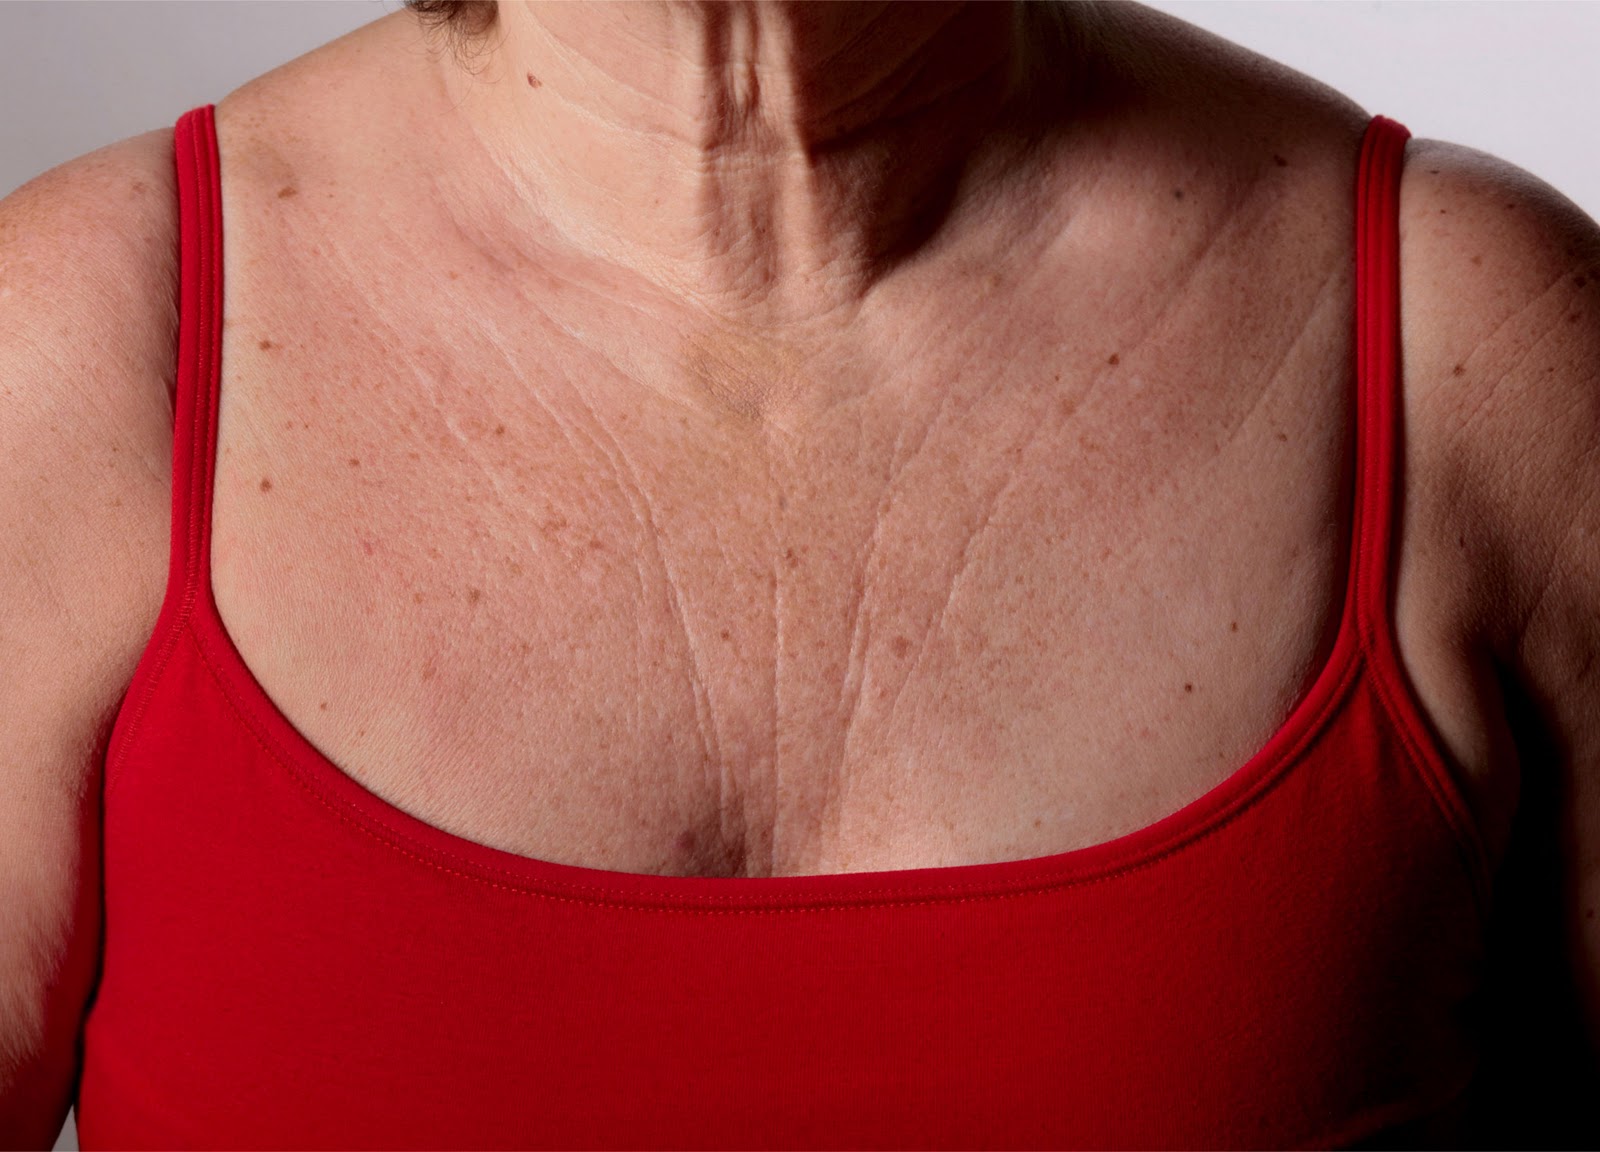 груди у женщин возраст фото 46